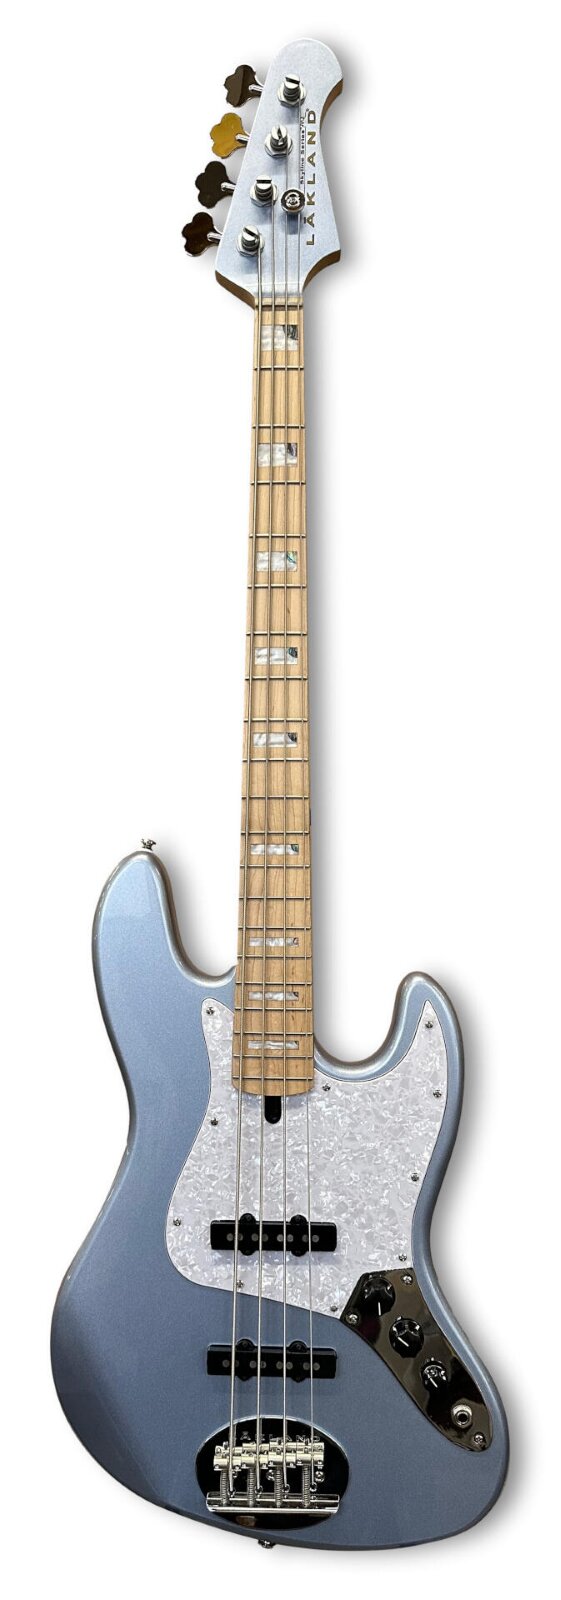 LAKLAND Skyline 44-60 Custom Bass, 4-String - Ice Blue Metallic Gloss : photo 1